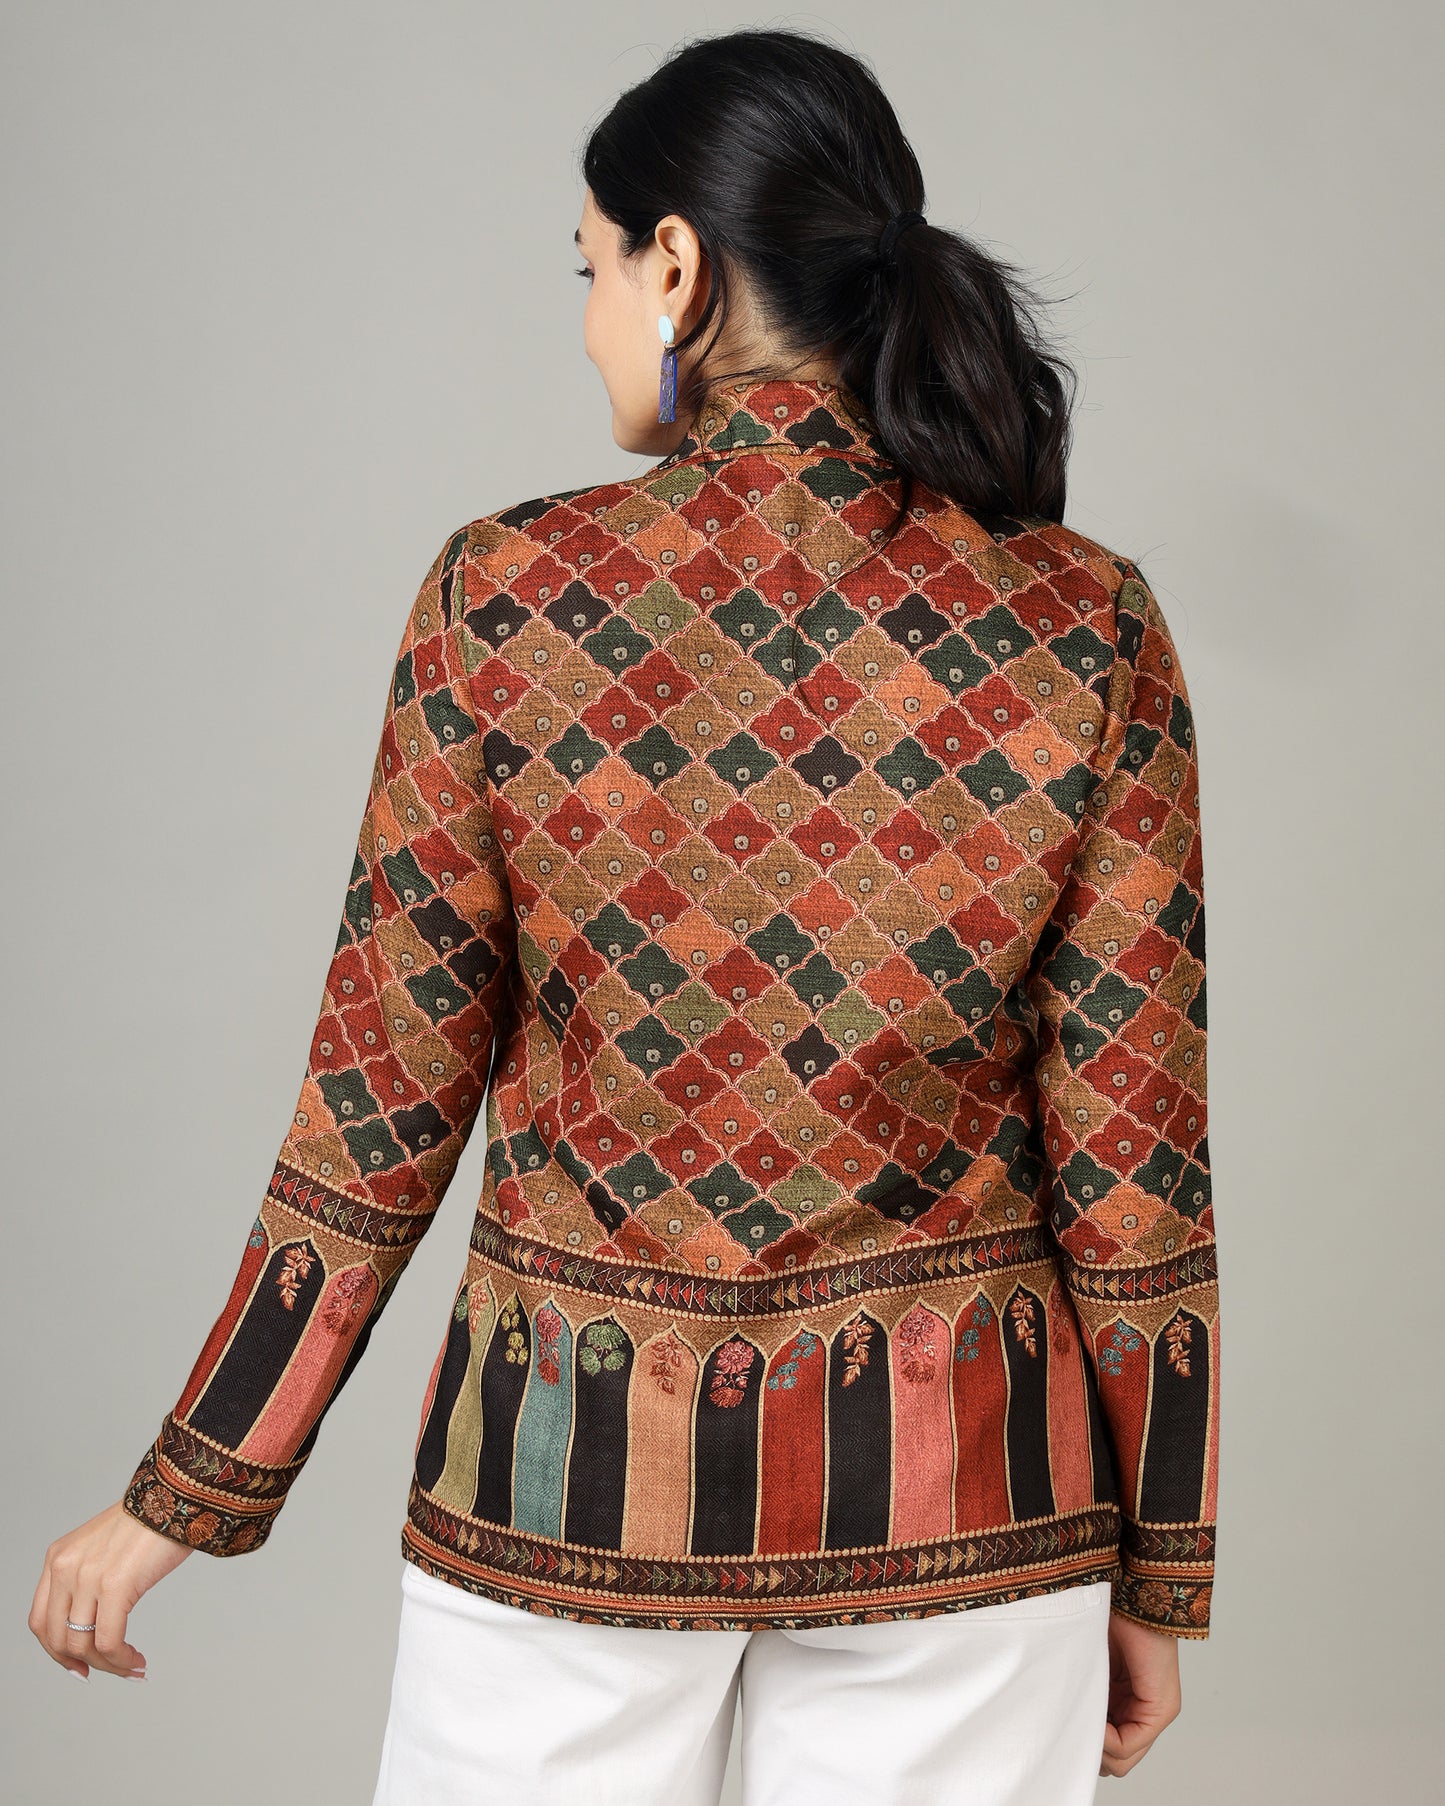 Introducing Make To Order Ethnic Women's Jacket